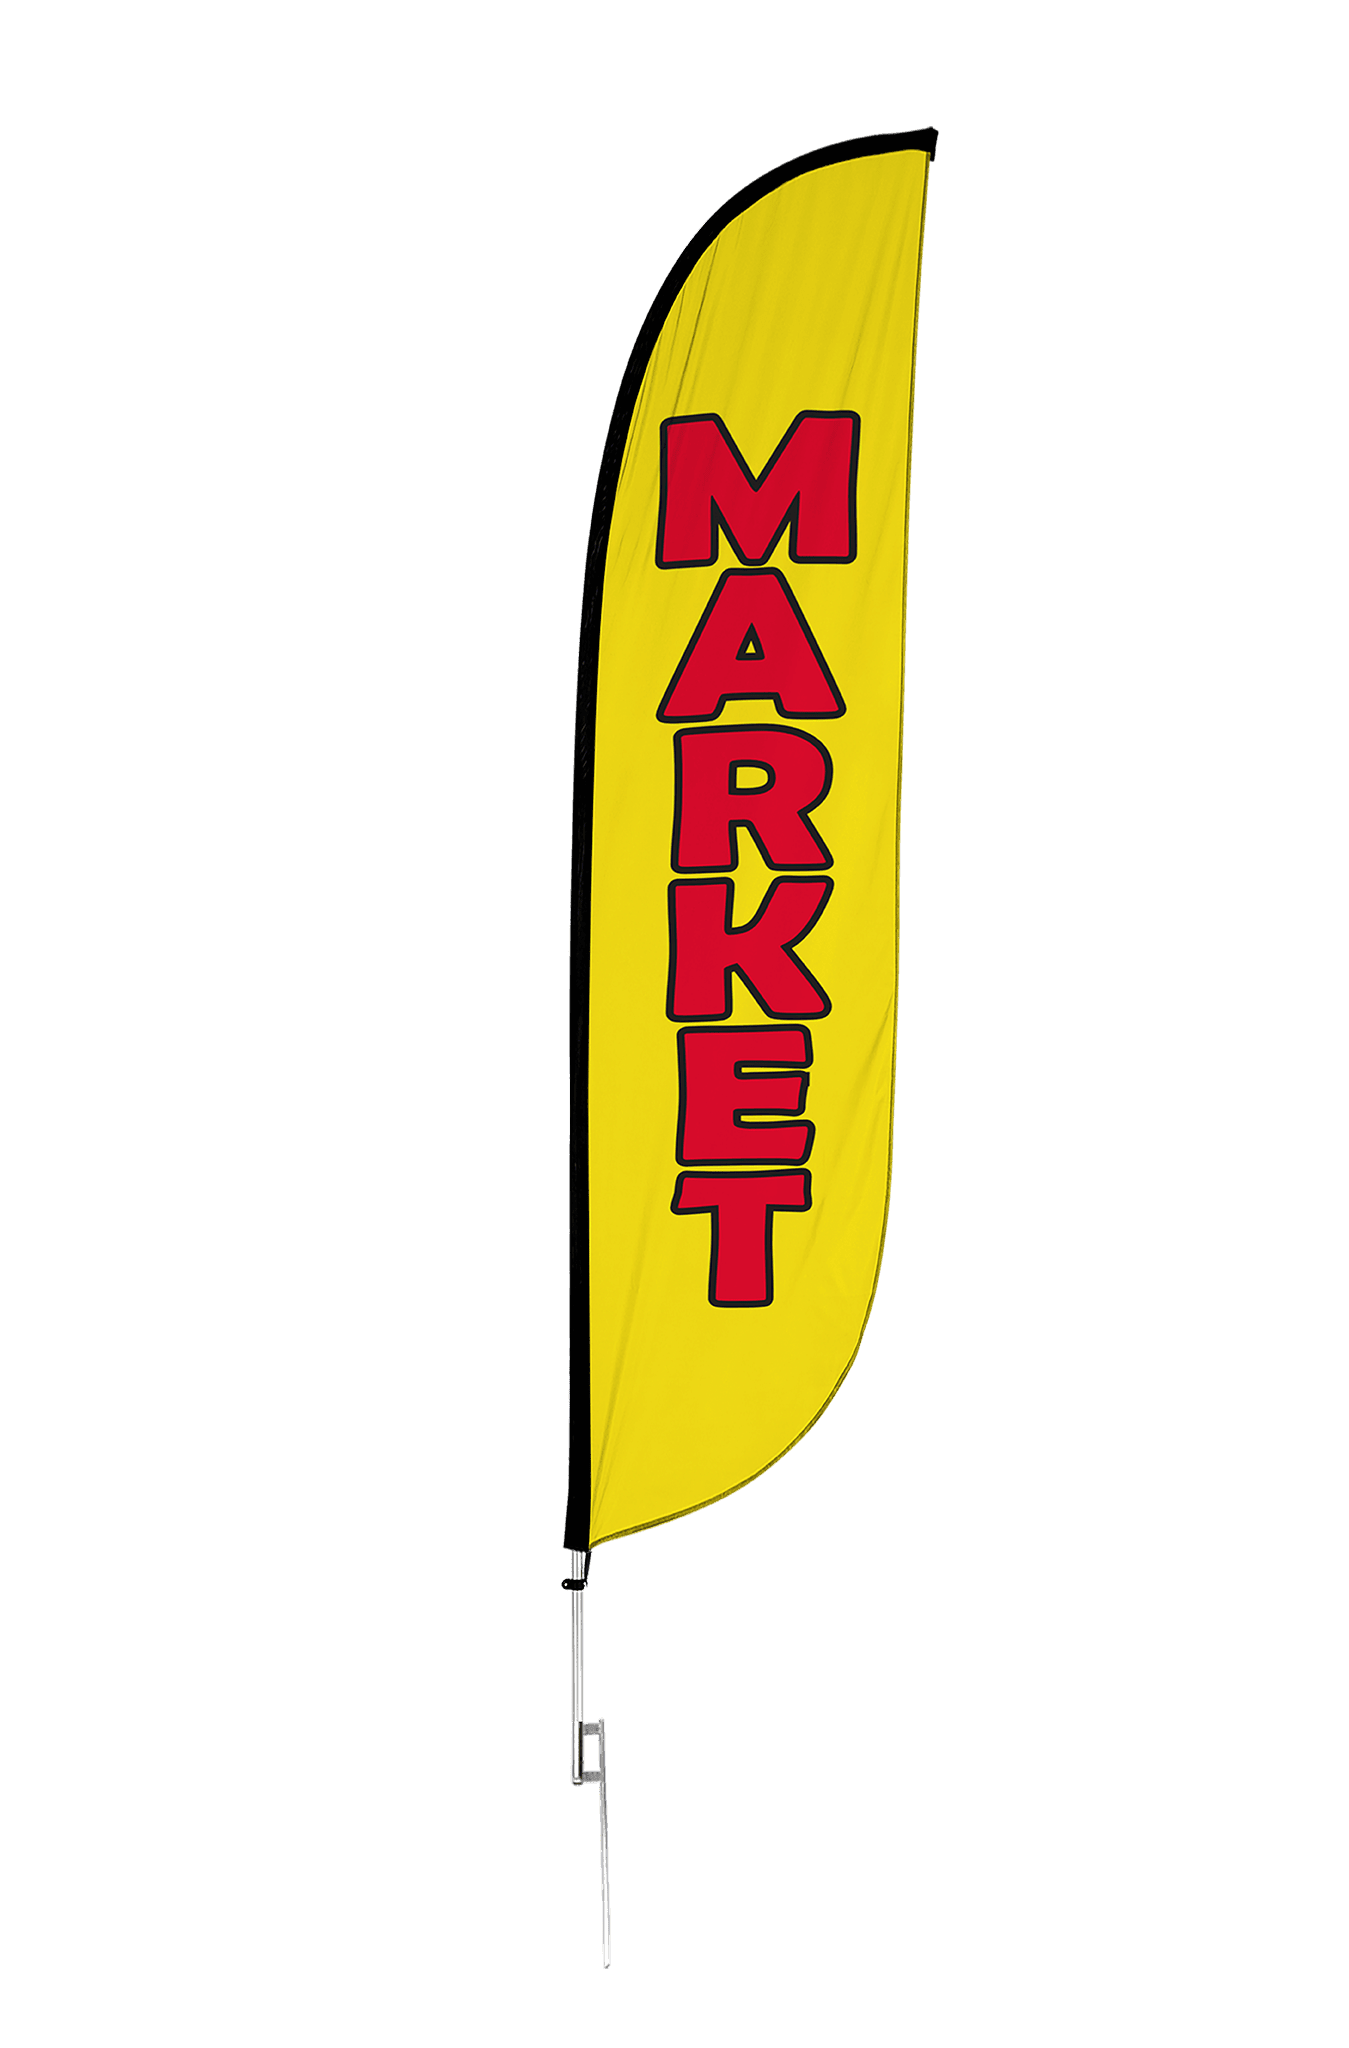 Market Feather Flag 